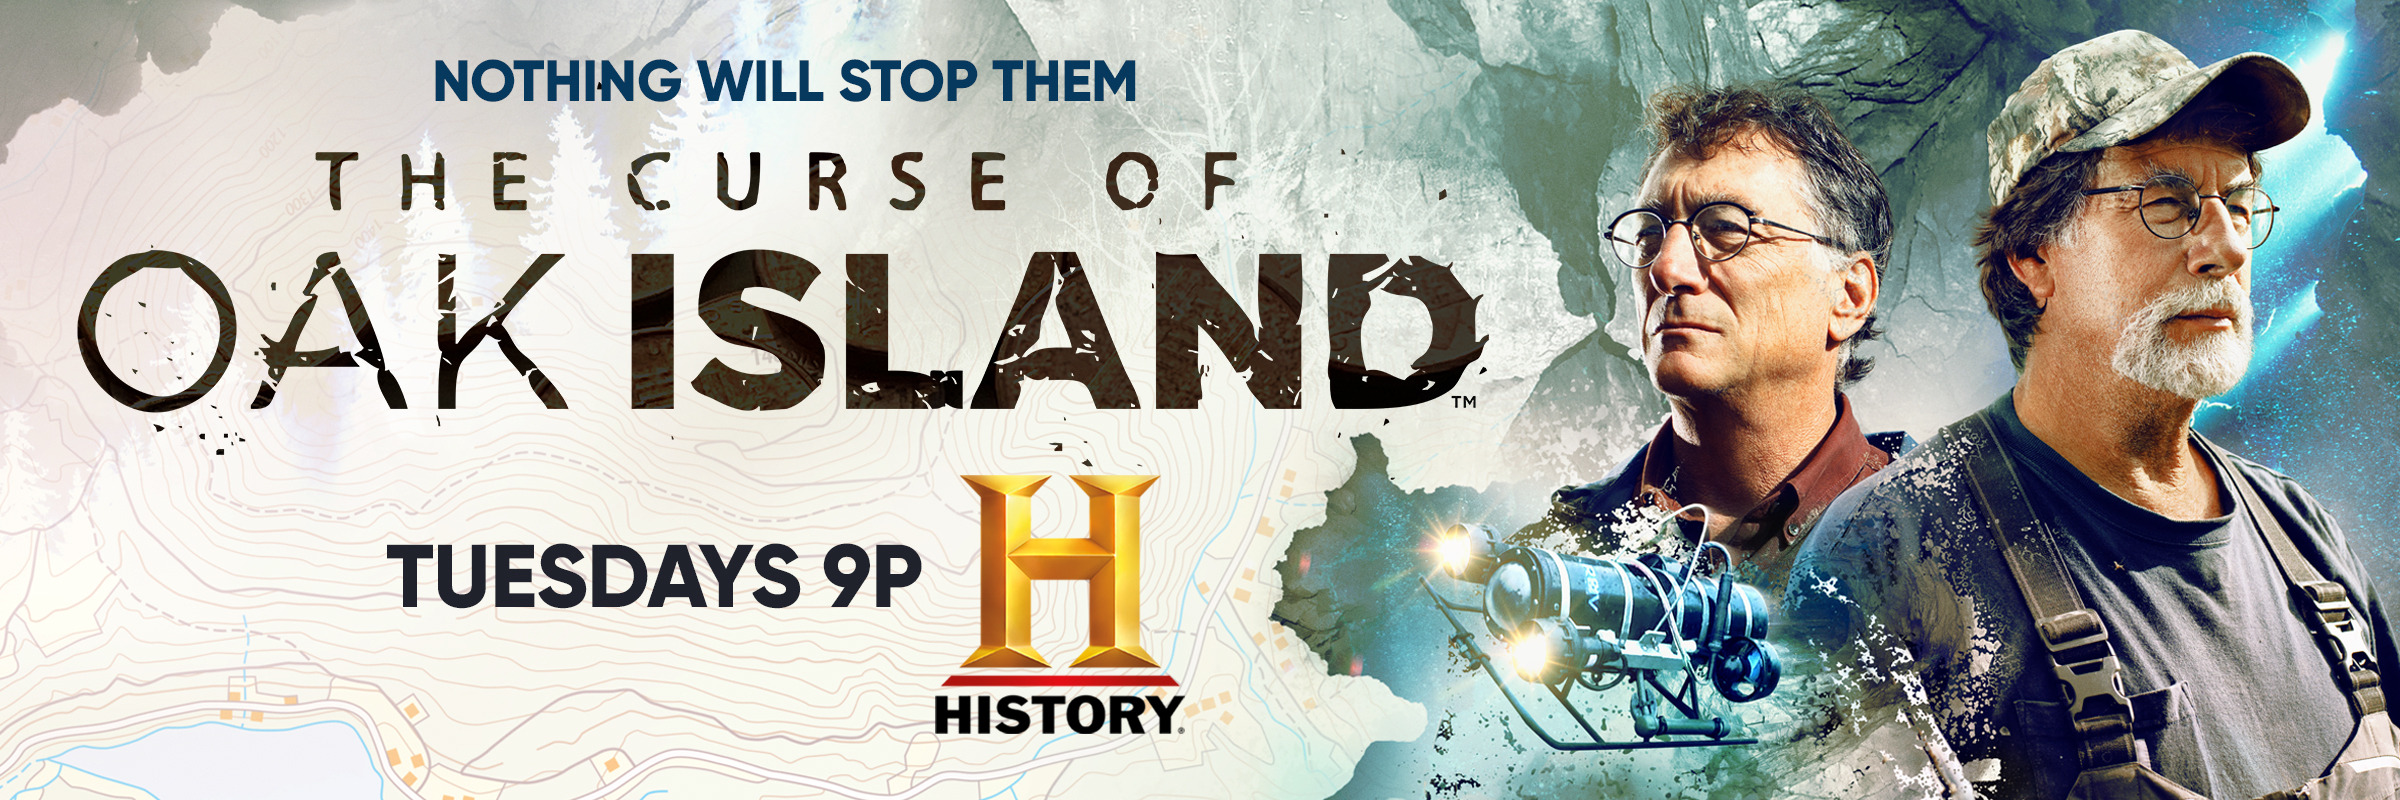 Mega Sized TV Poster Image for The Curse of Oak Island (#5 of 7)